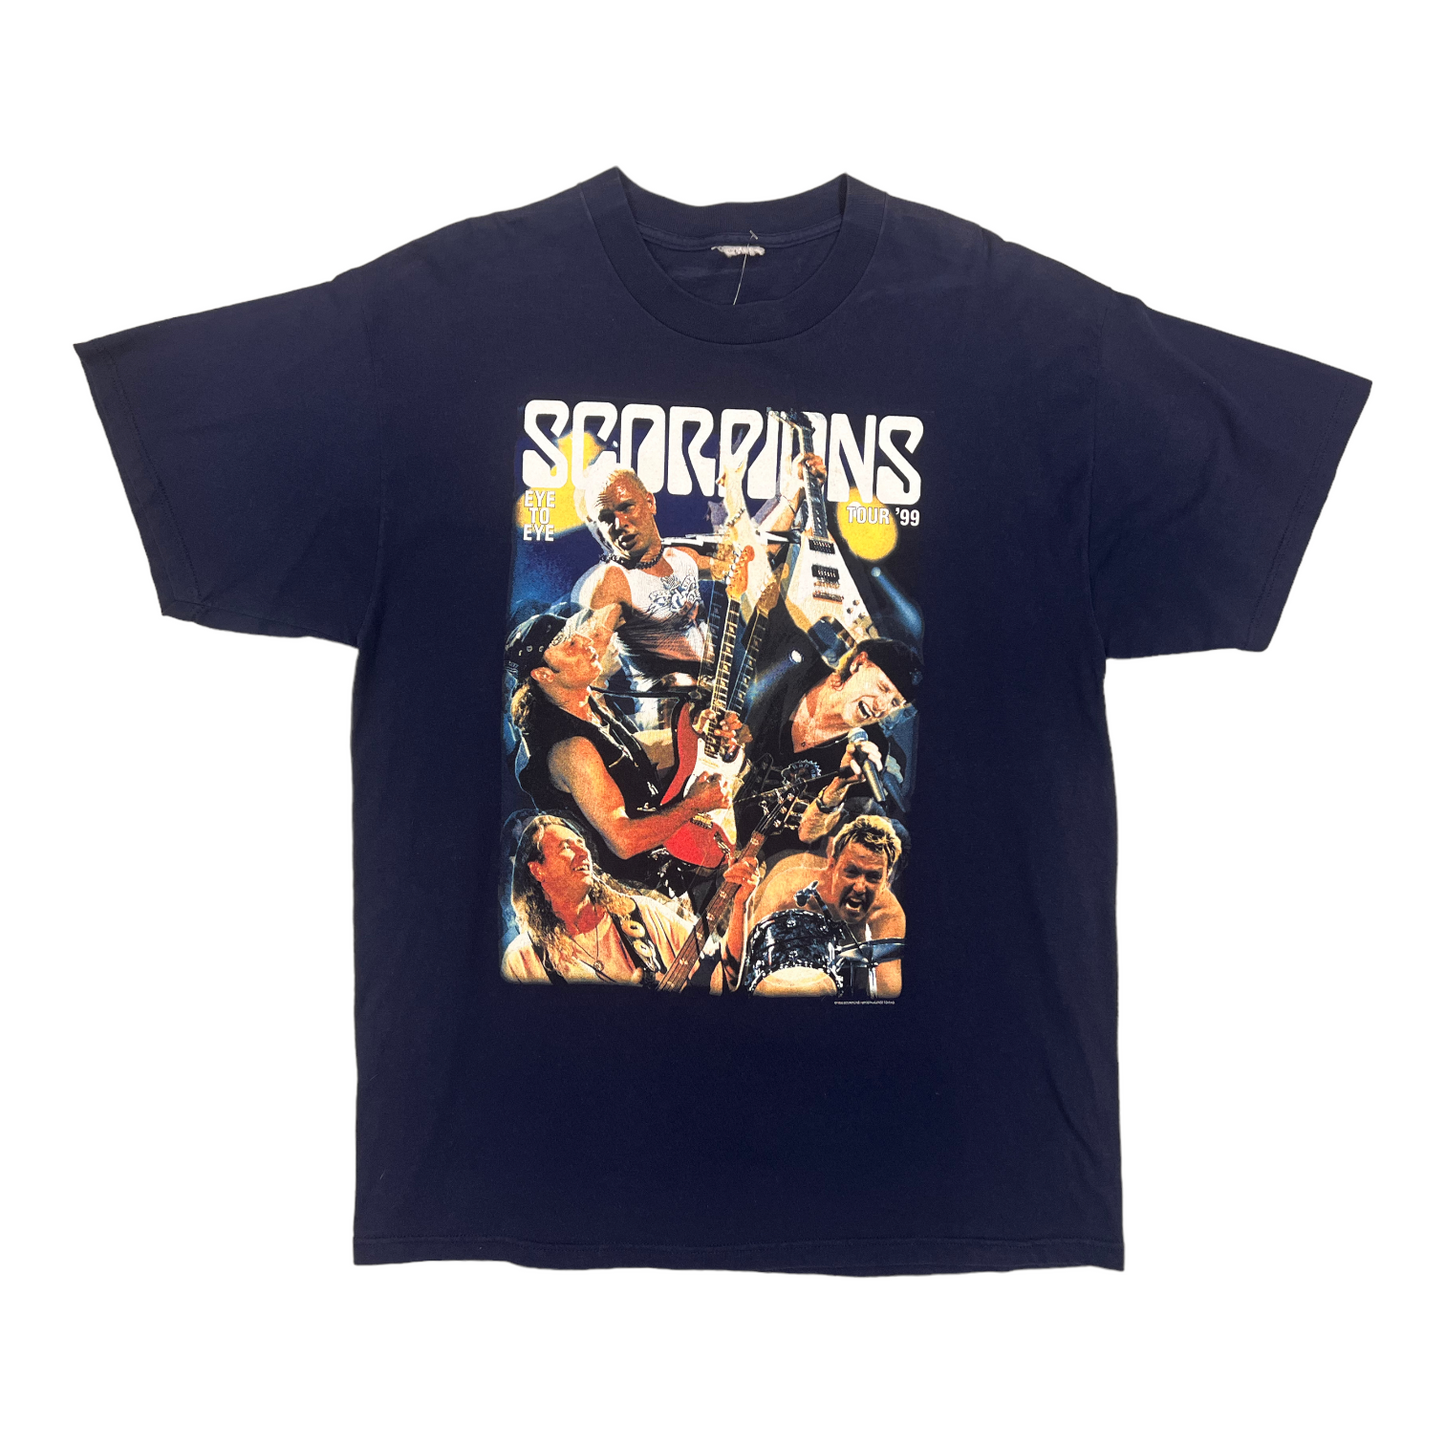 1999 Scorpions "Eye to Eye" Vintage Tour shirt